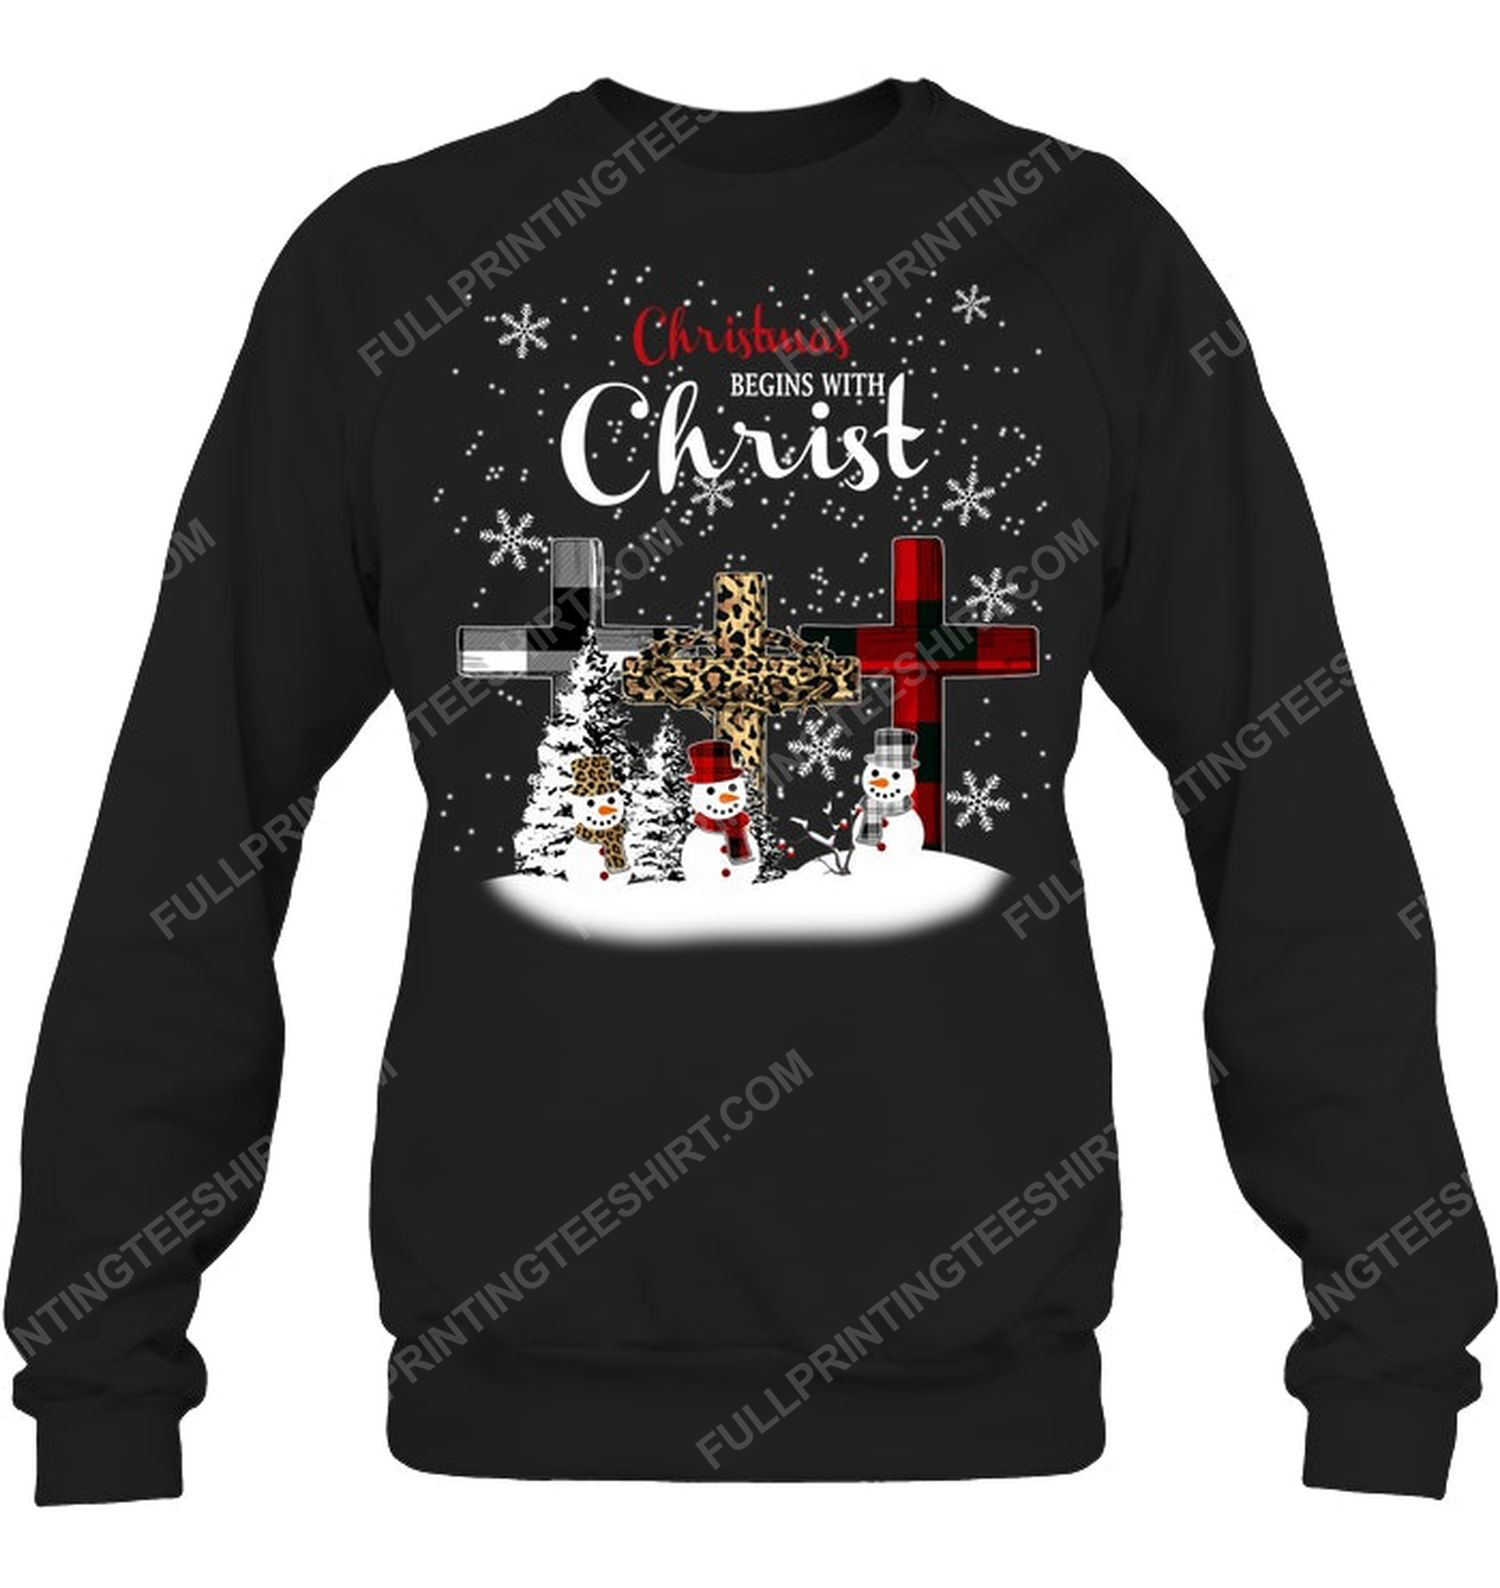 Christmas begins with christ snowman sweatshirt